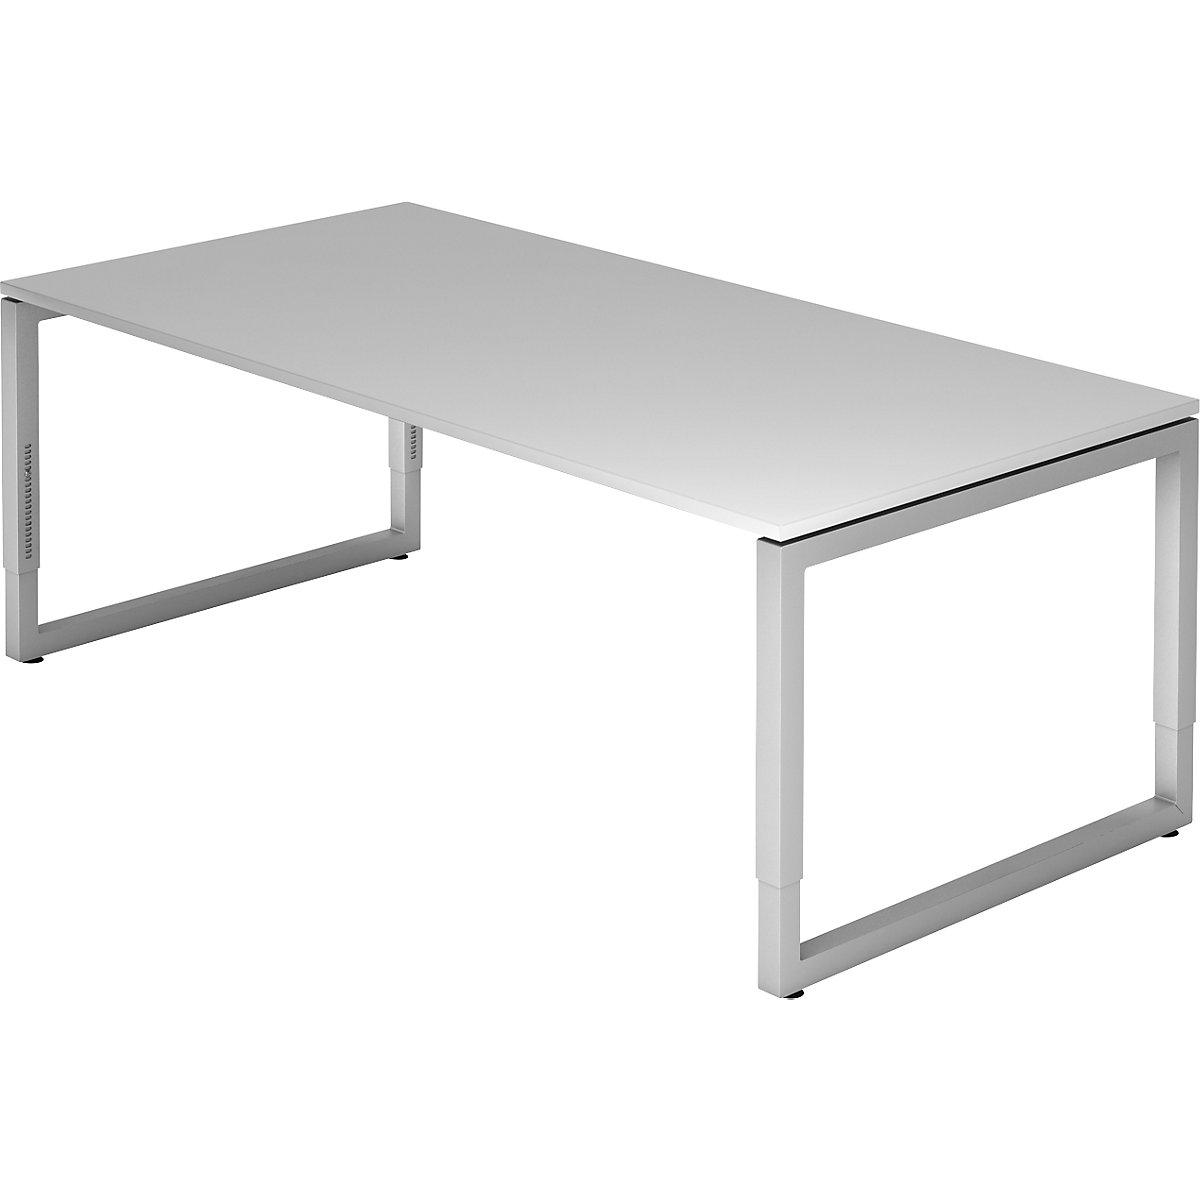 Desk with frame made of rectangular tubular steel ANNY – eurokraft pro, WxD 2000 x 1000 mm, light grey-7